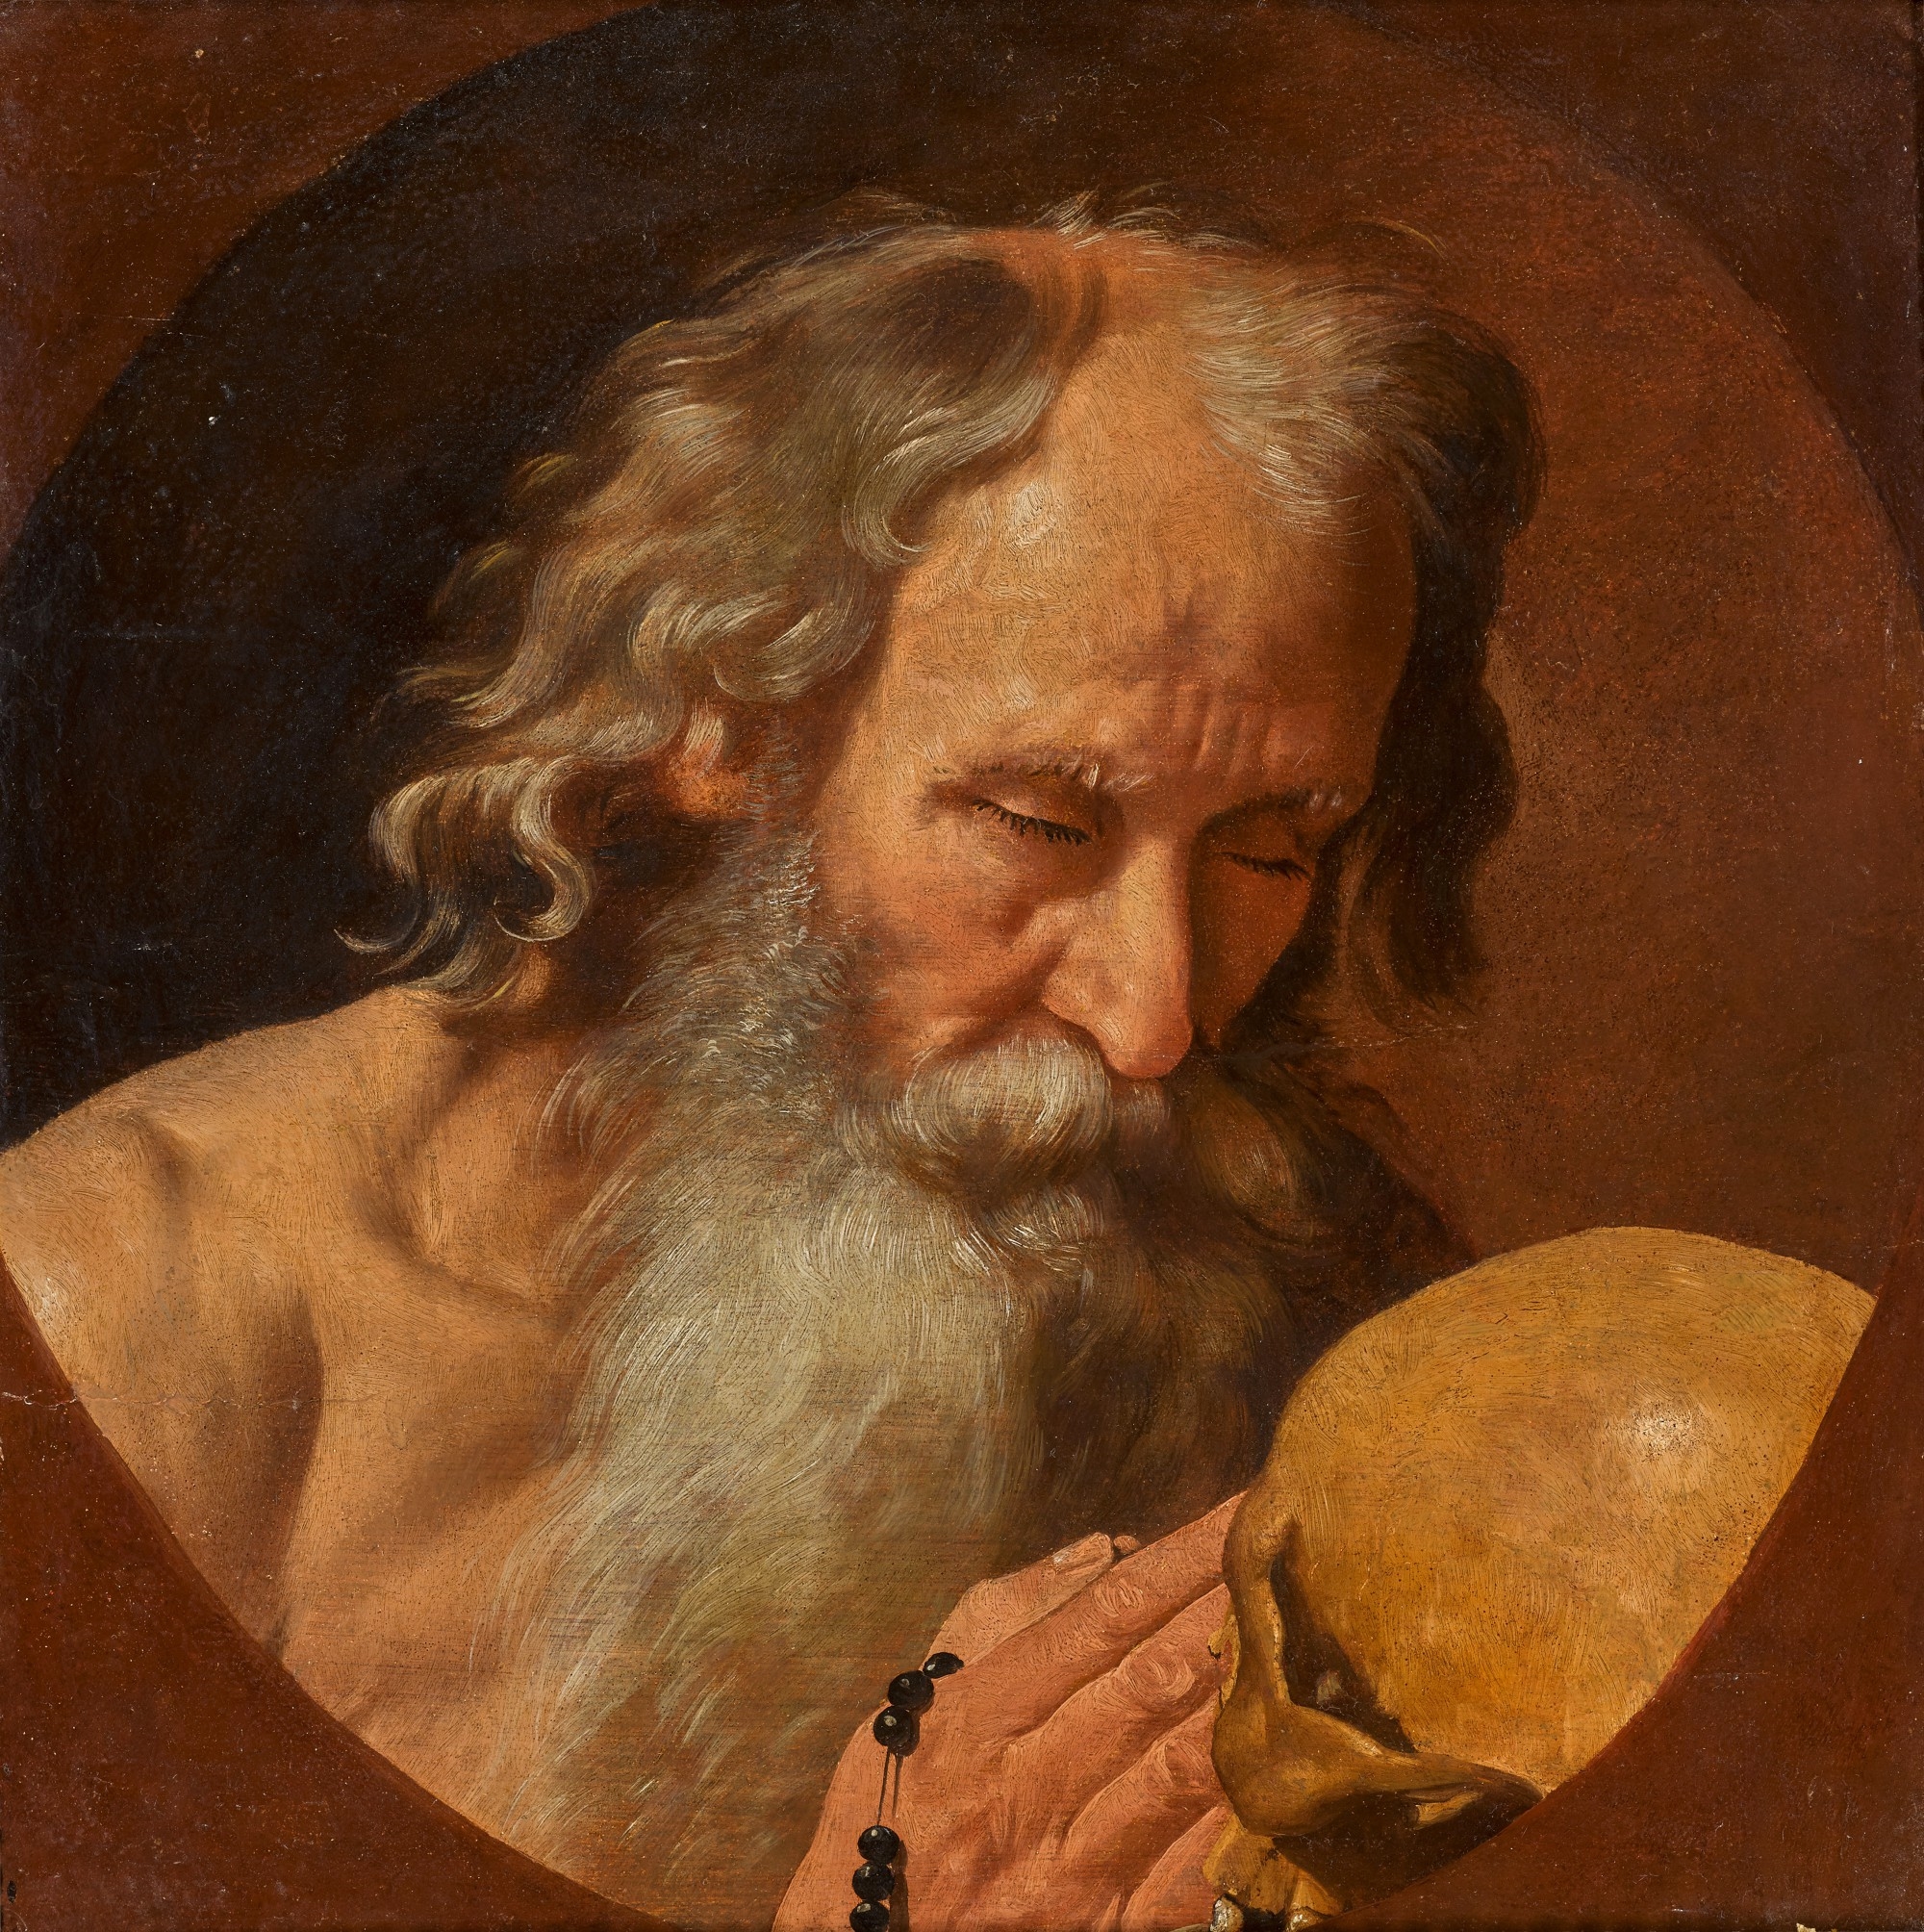 Saint Paul of Thebes by Hendryck Van Somer